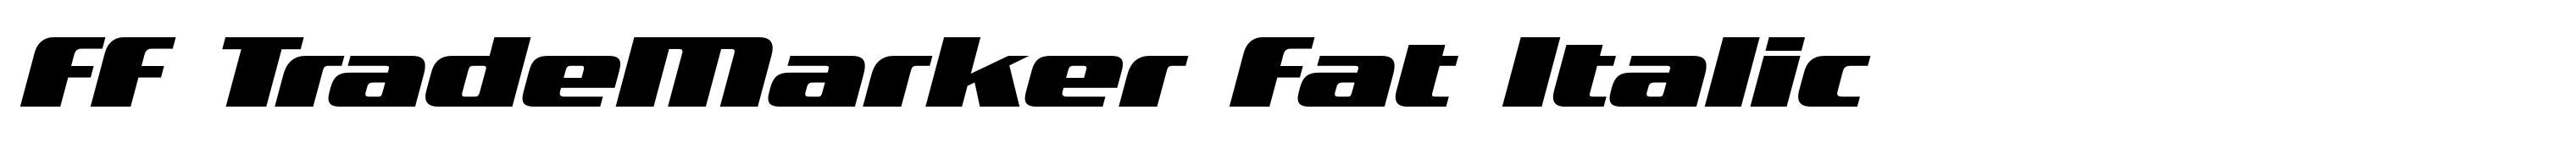 FF TradeMarker Fat Italic